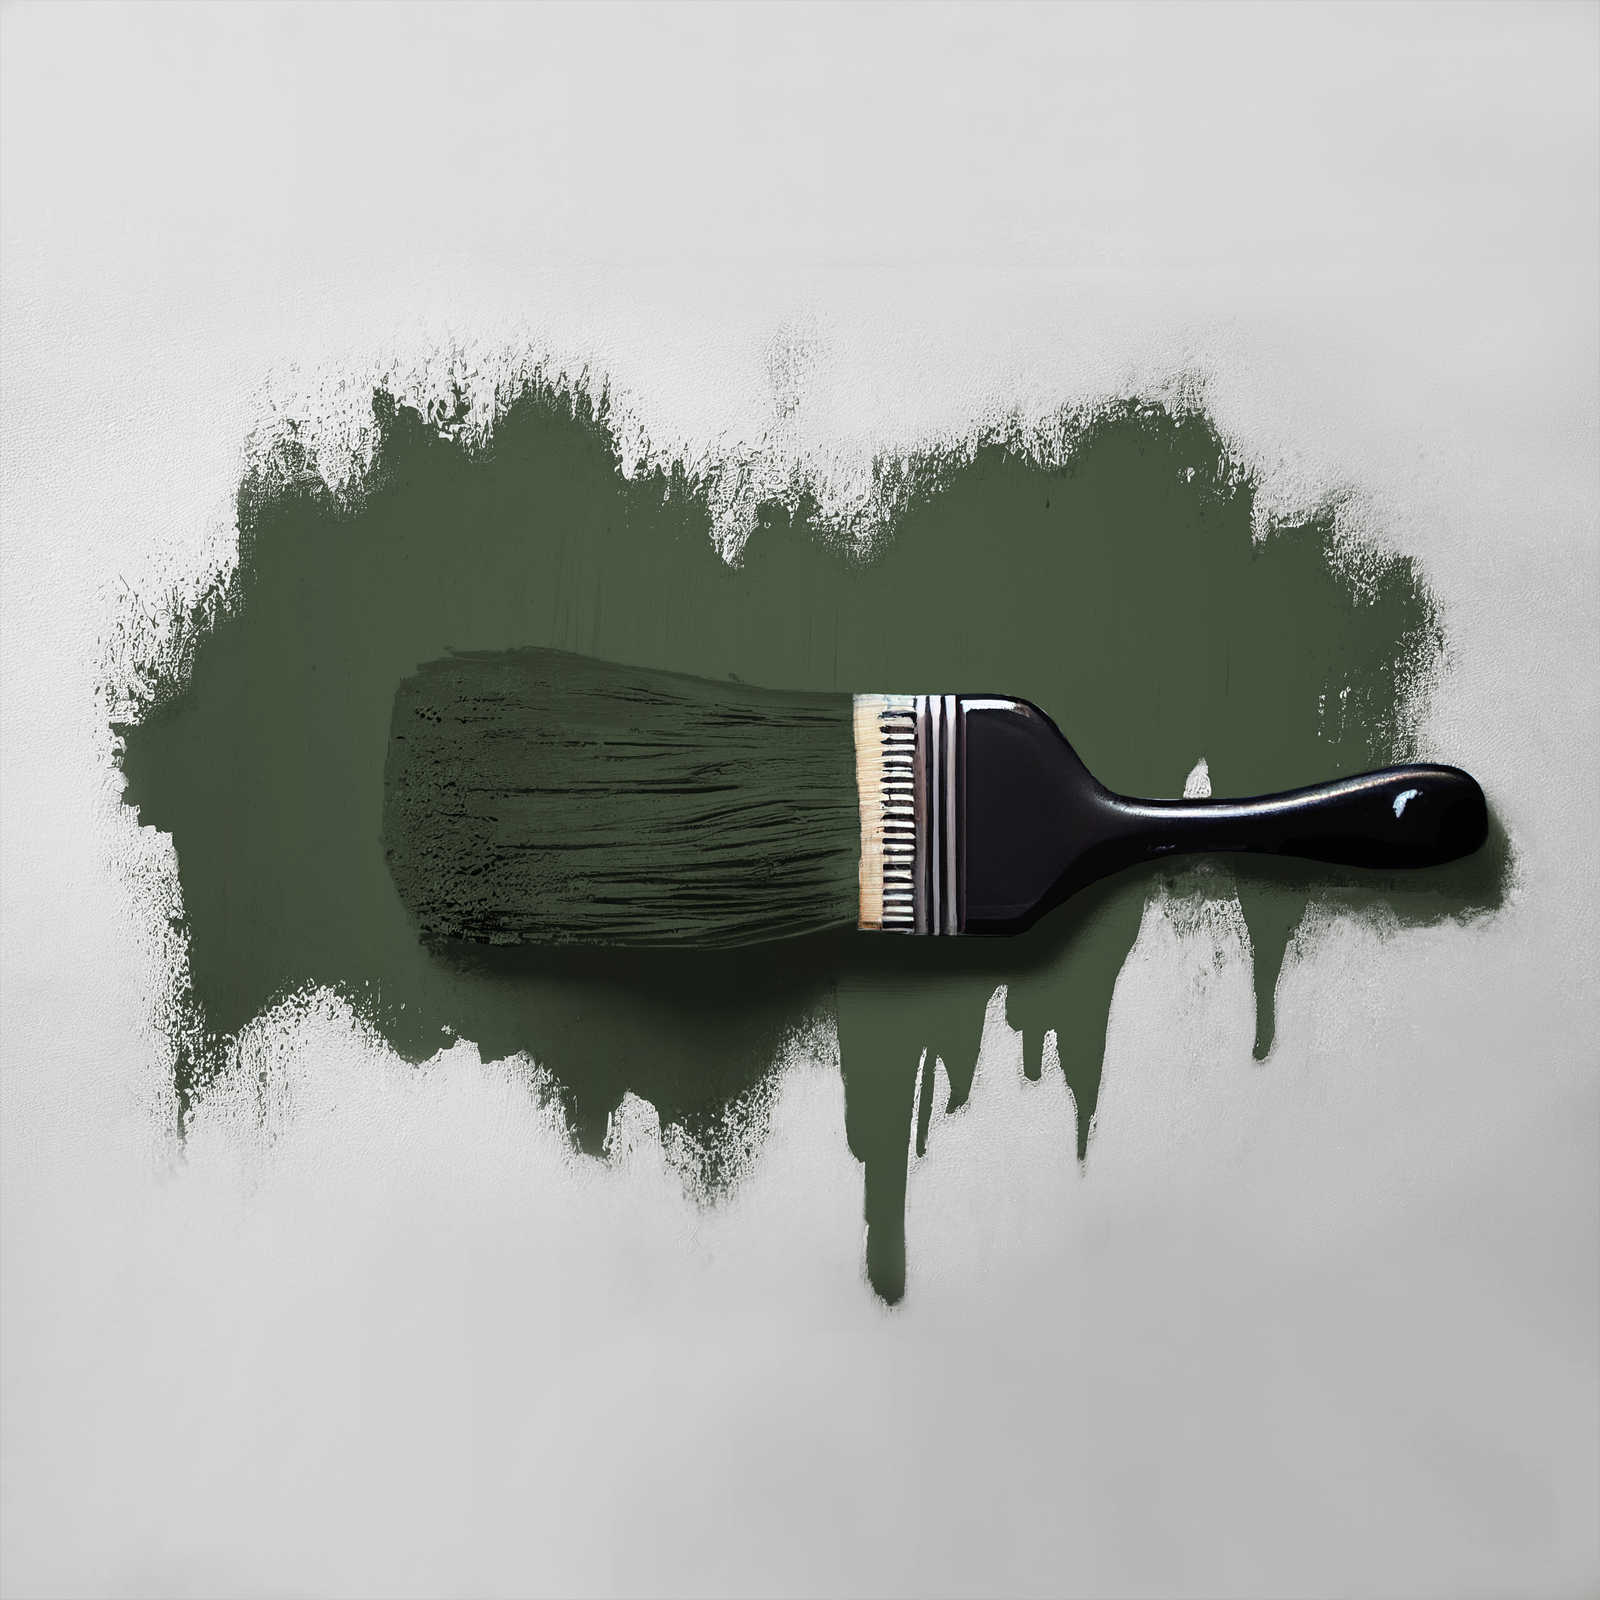             Peinture murale TCK4006 »Zippy Zuchini« en vert foncé intense – 2,5 litres
        